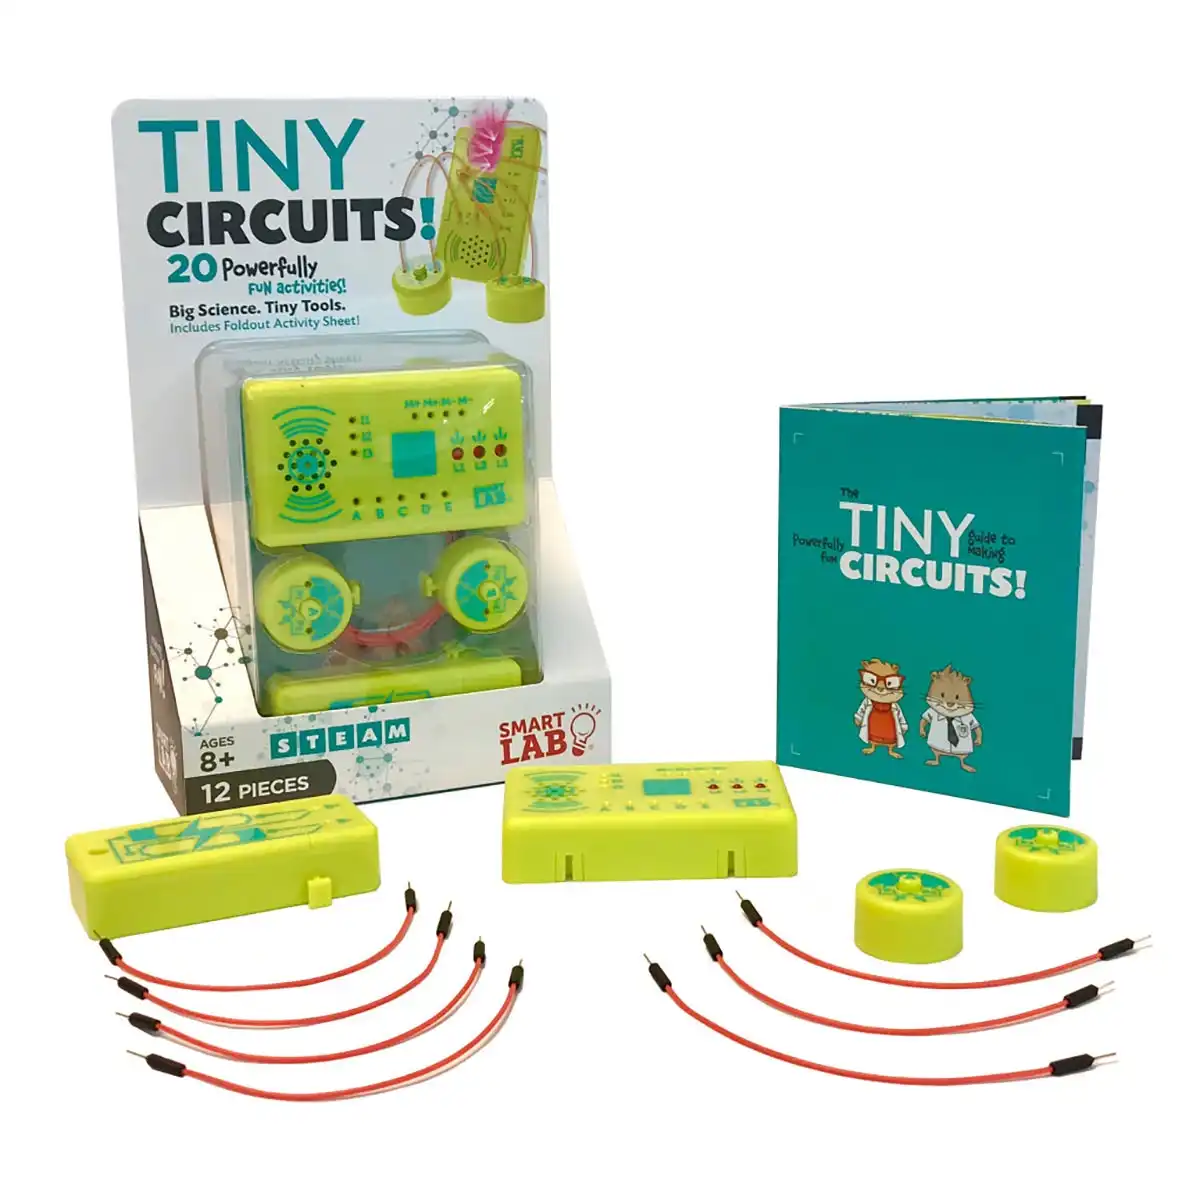 Smart Lab Tiny Circuits!